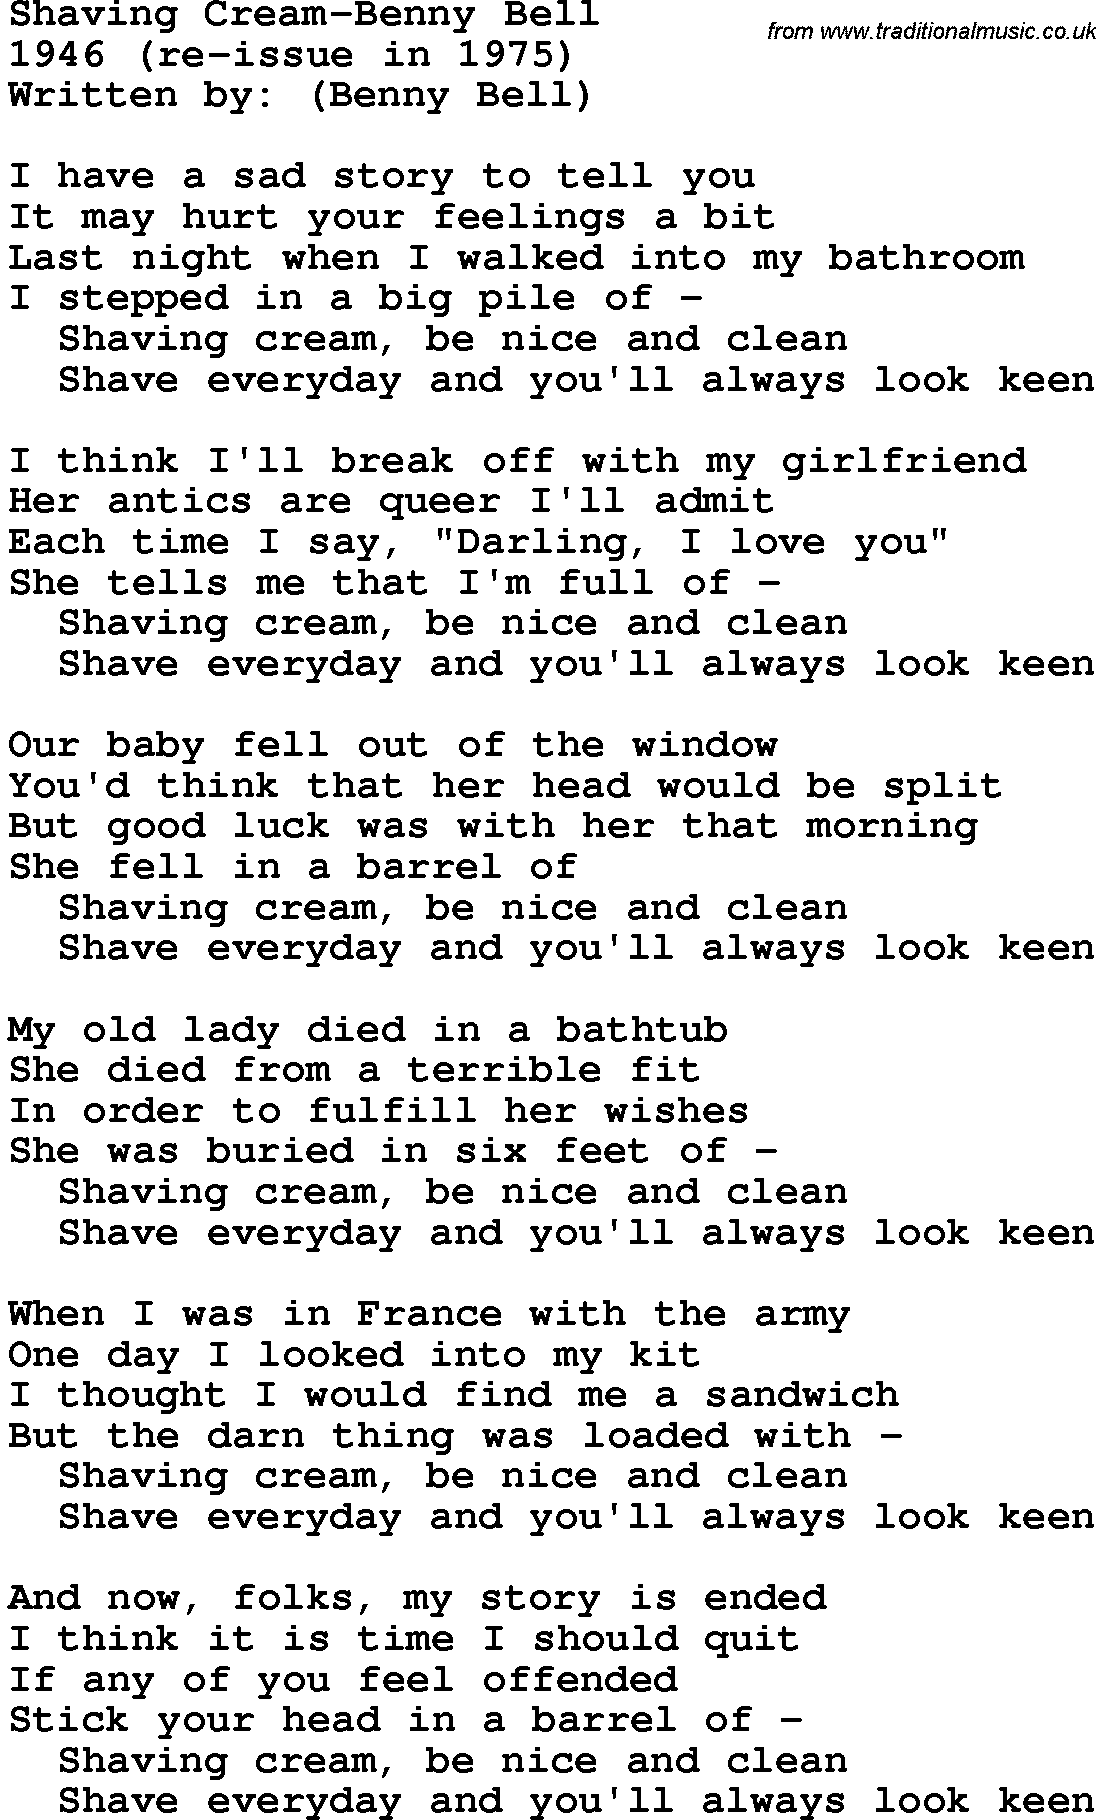 Novelty song: Shaving Cream-Benny Bell lyrics